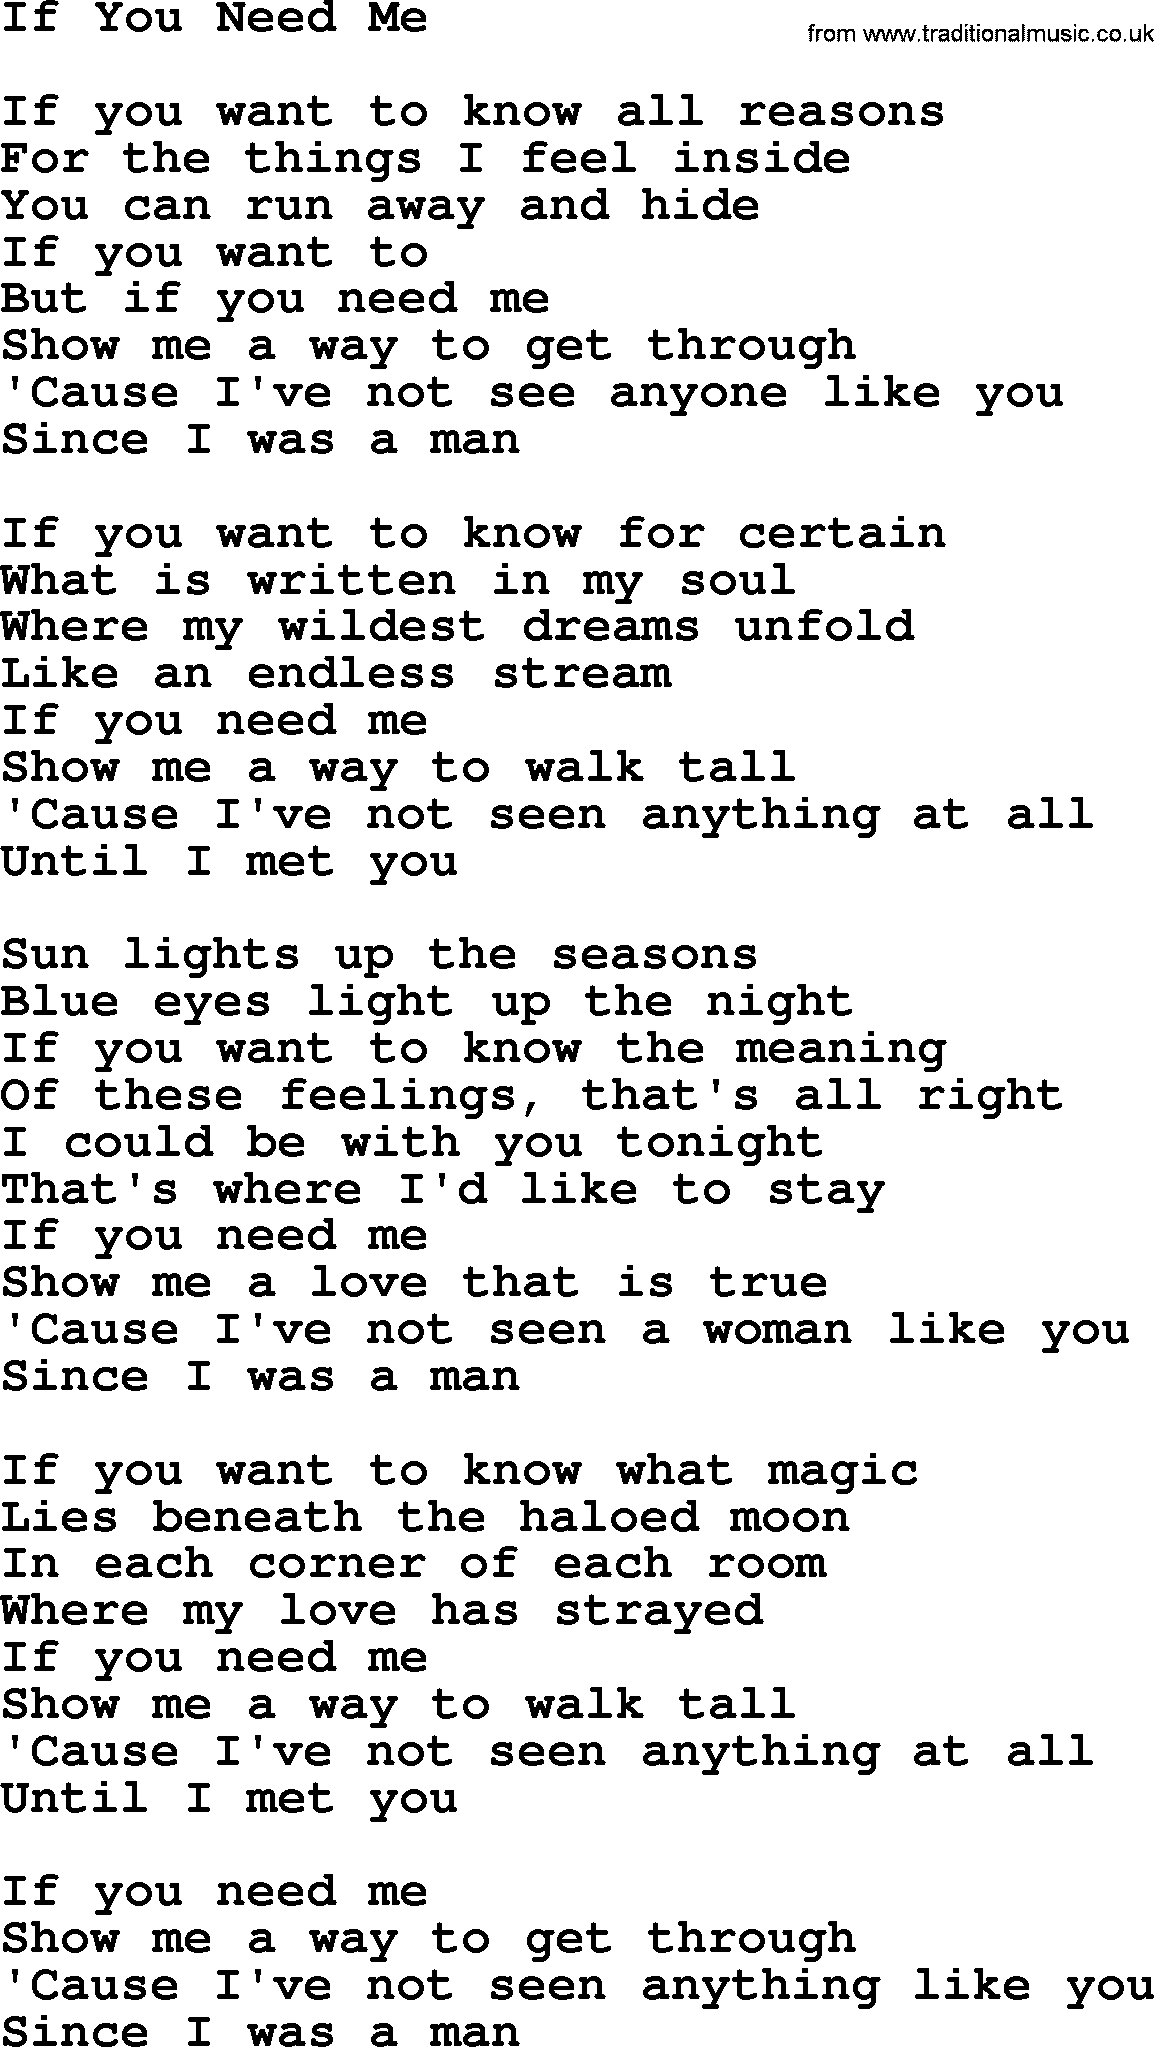 Gordon Lightfoot song If You Need Me, lyrics